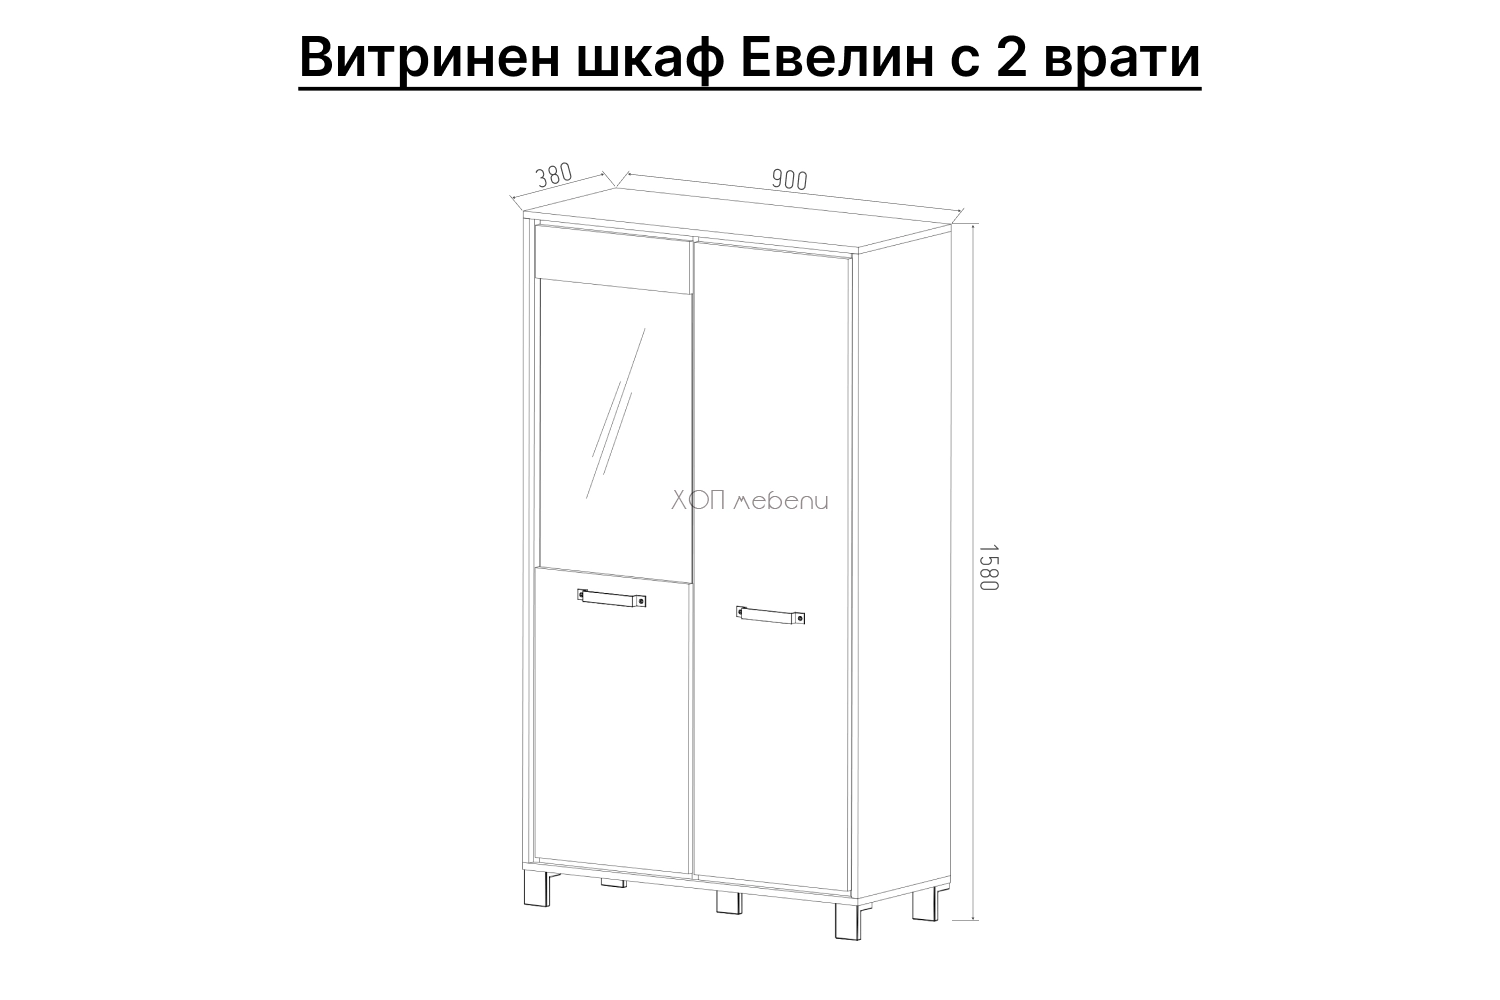 Размери на Витринен шкаф Евелин с 2 врати ID 14521